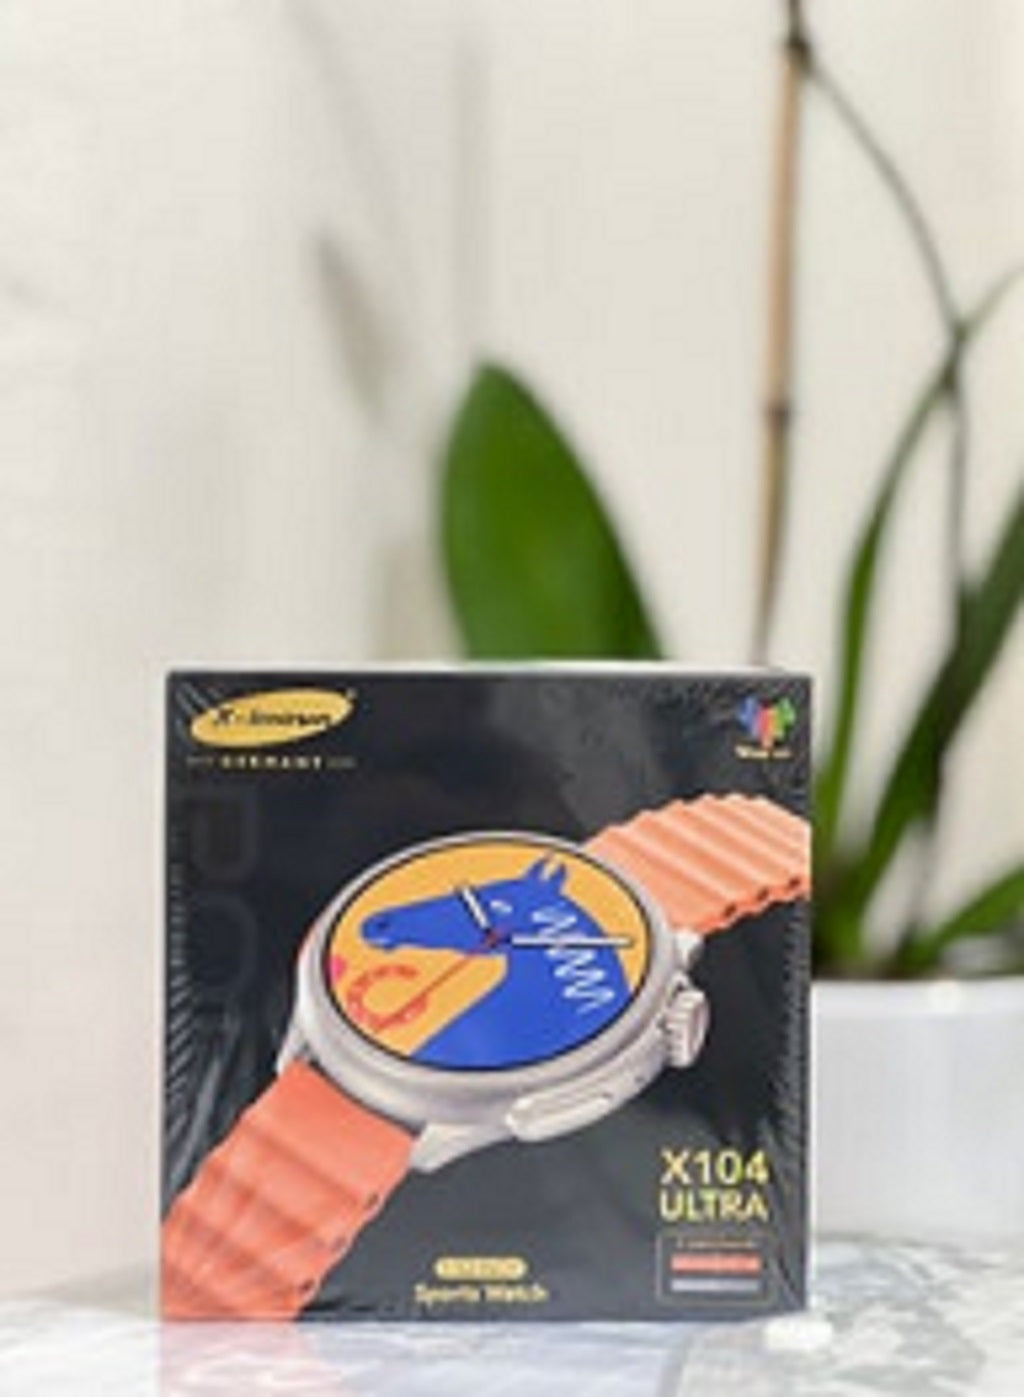 X104 Ultra smart watch